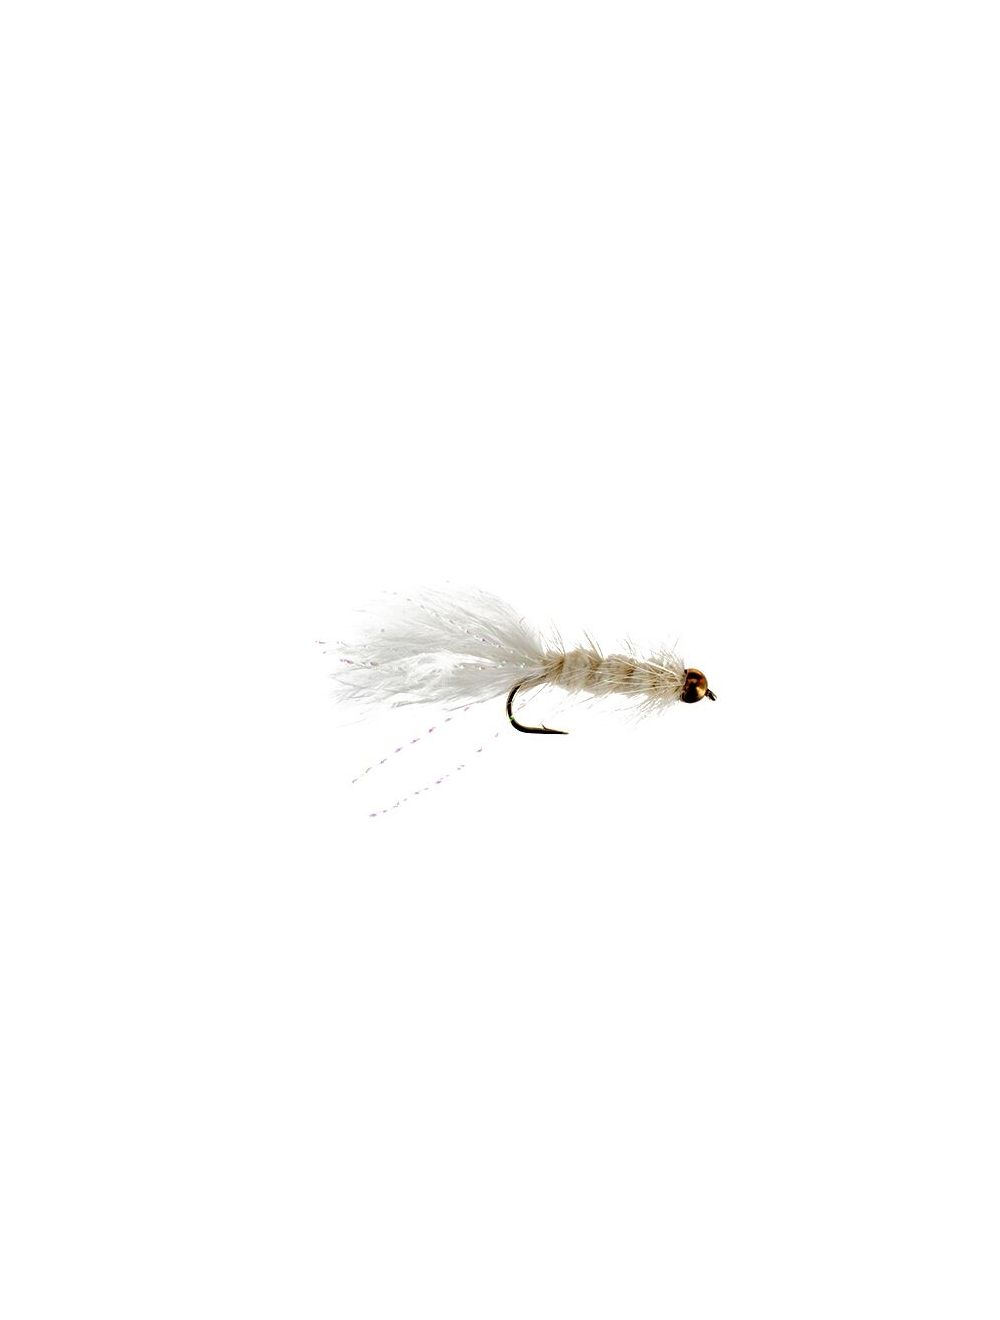 https://eadn-wc02-1020161.nxedge.io/cdn/media/catalog/product/cache/32b930e20bfef0c9badd7ee253a86131/b/e/beadhead-woolly-bugger-white-fly-fishing-flies-streamers_preview.jpeg